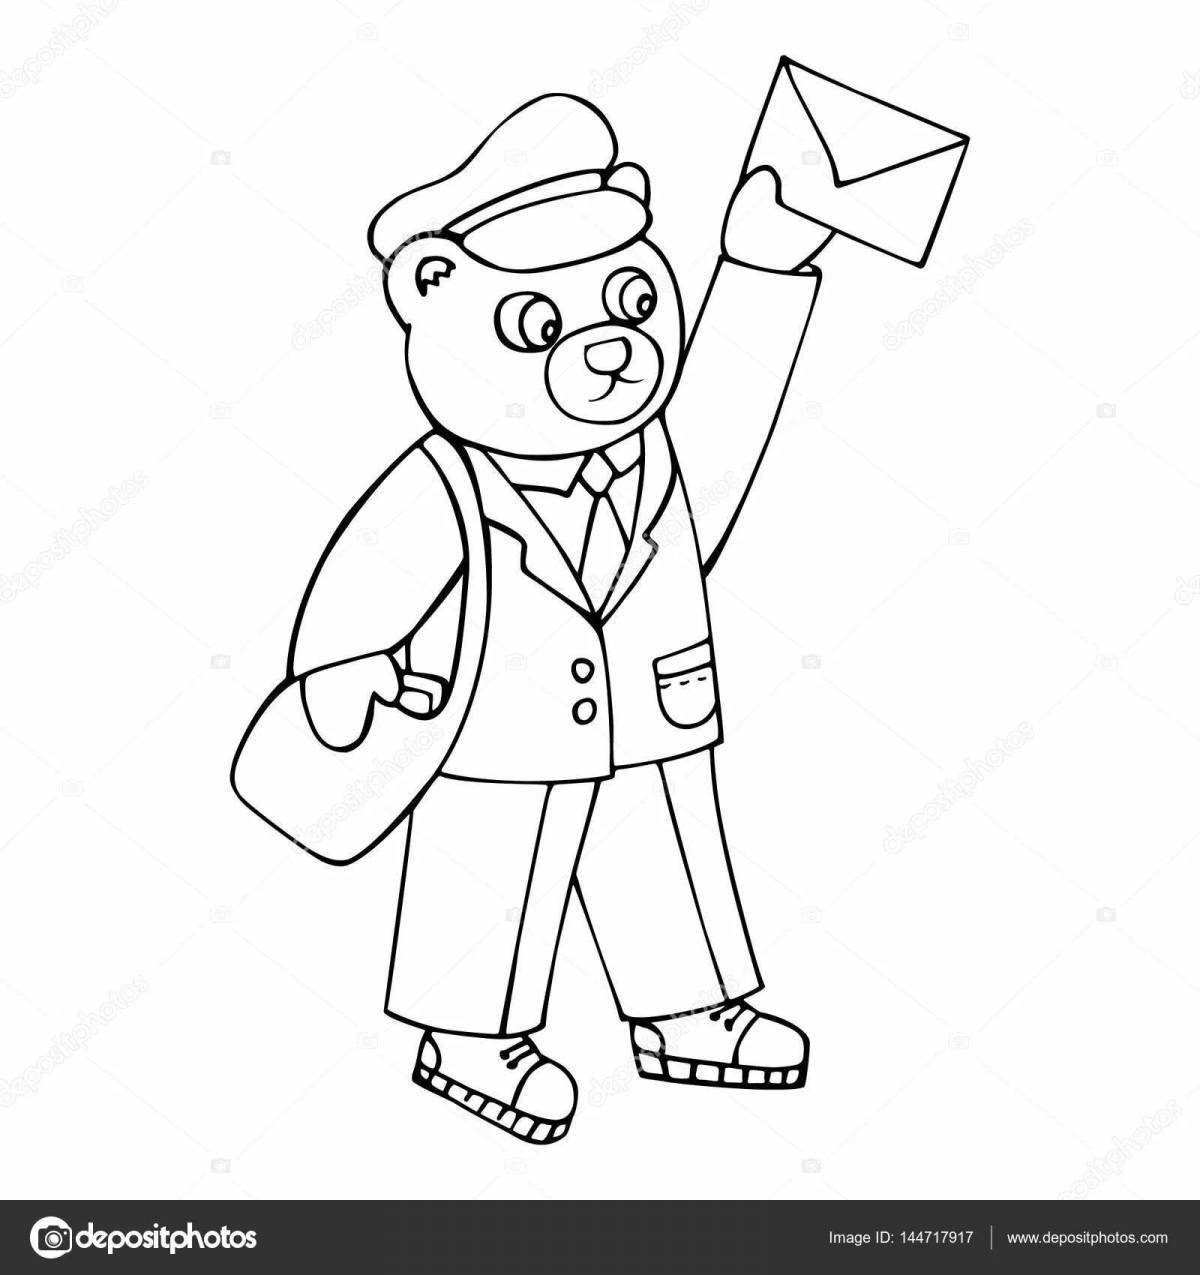 Playful postman coloring for preschoolers